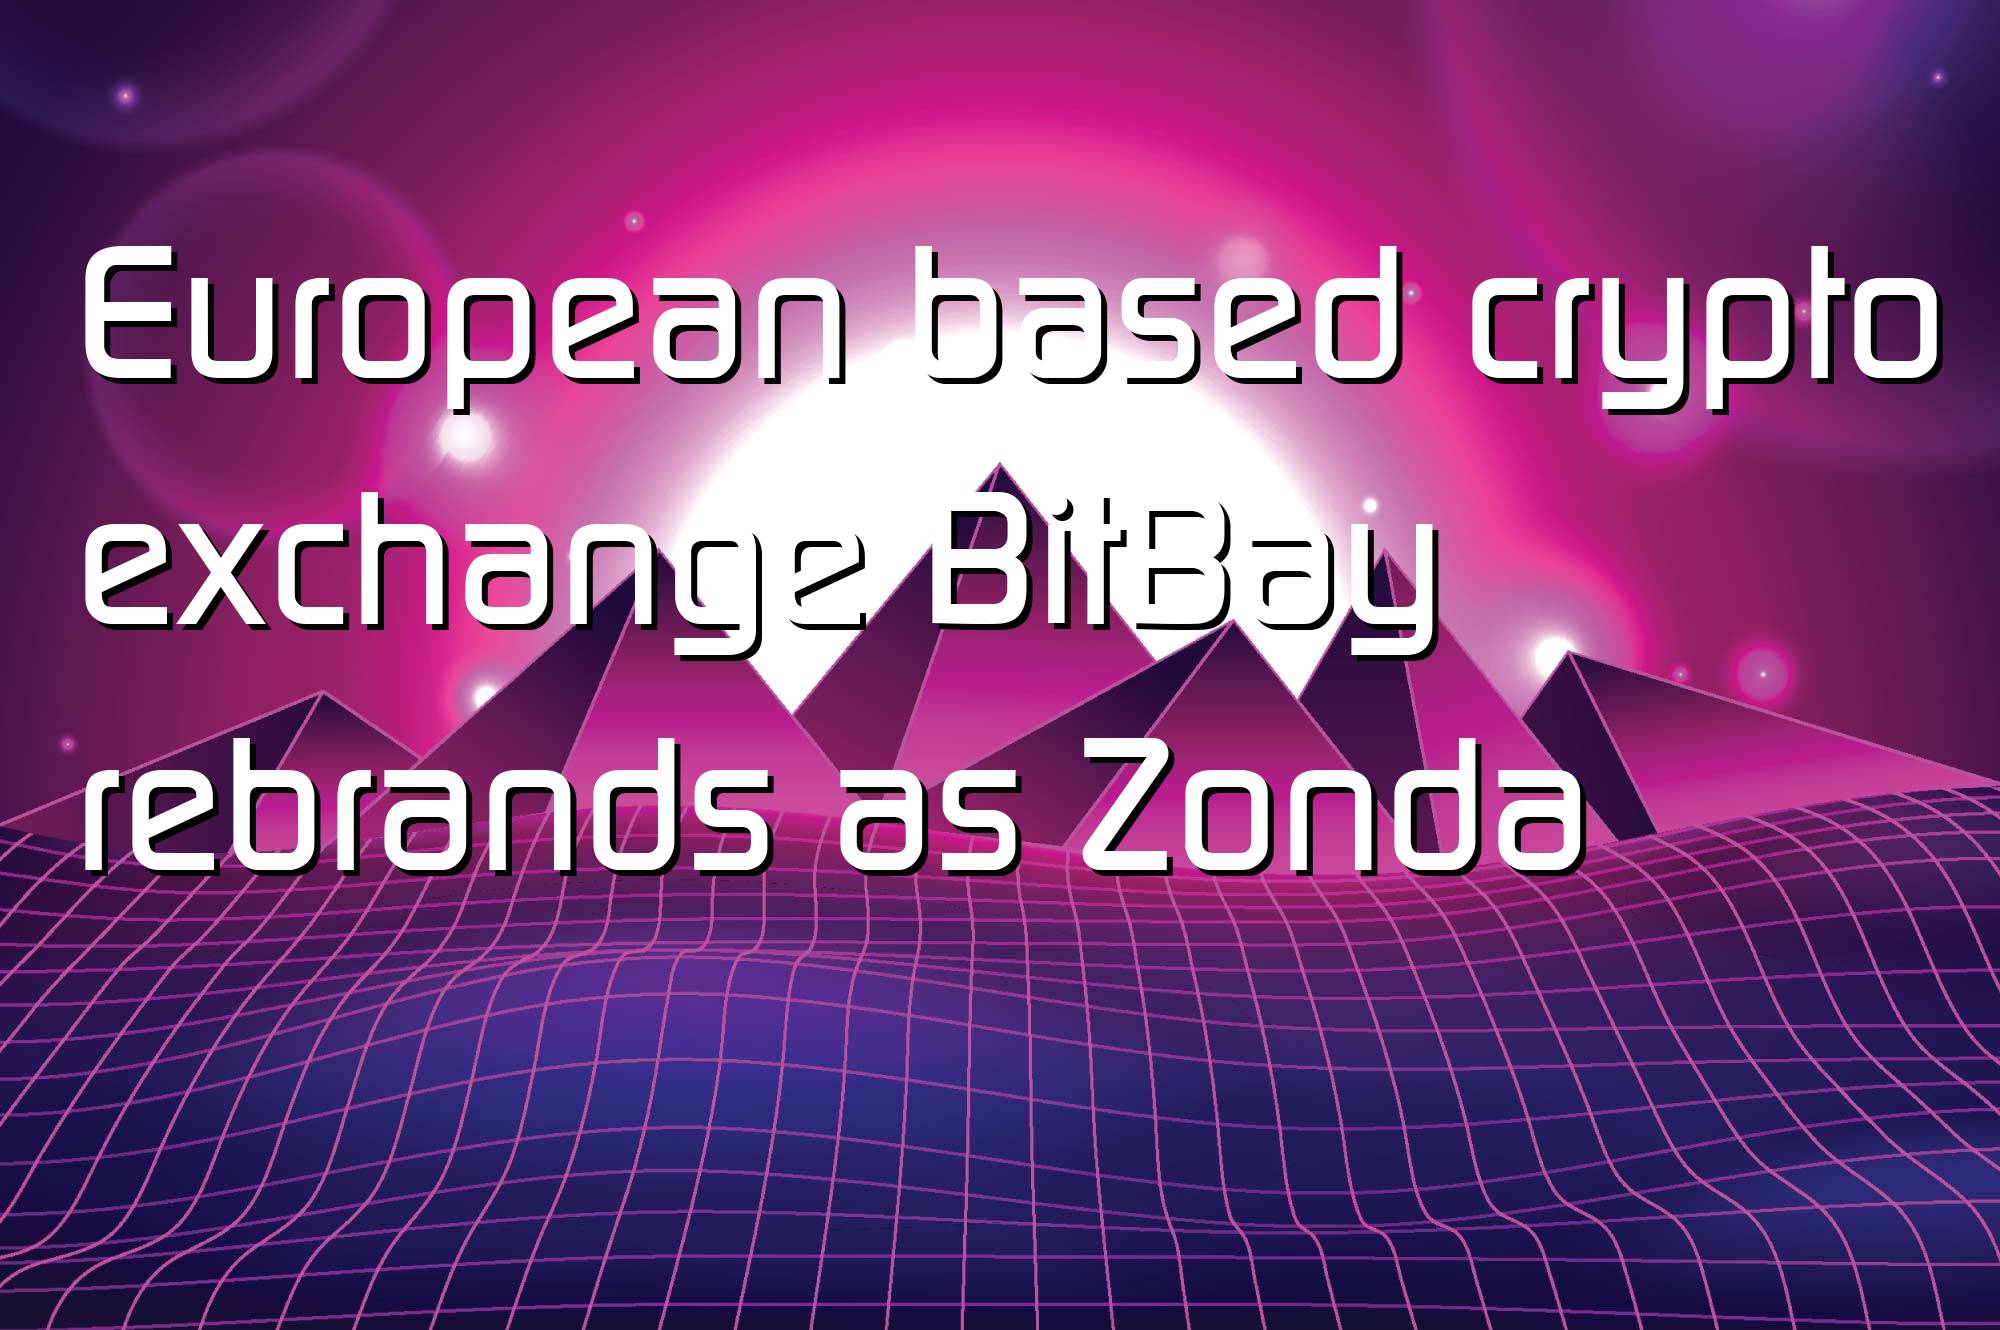 @$66944: European based crypto exchange BitBay rebrands as Zonda